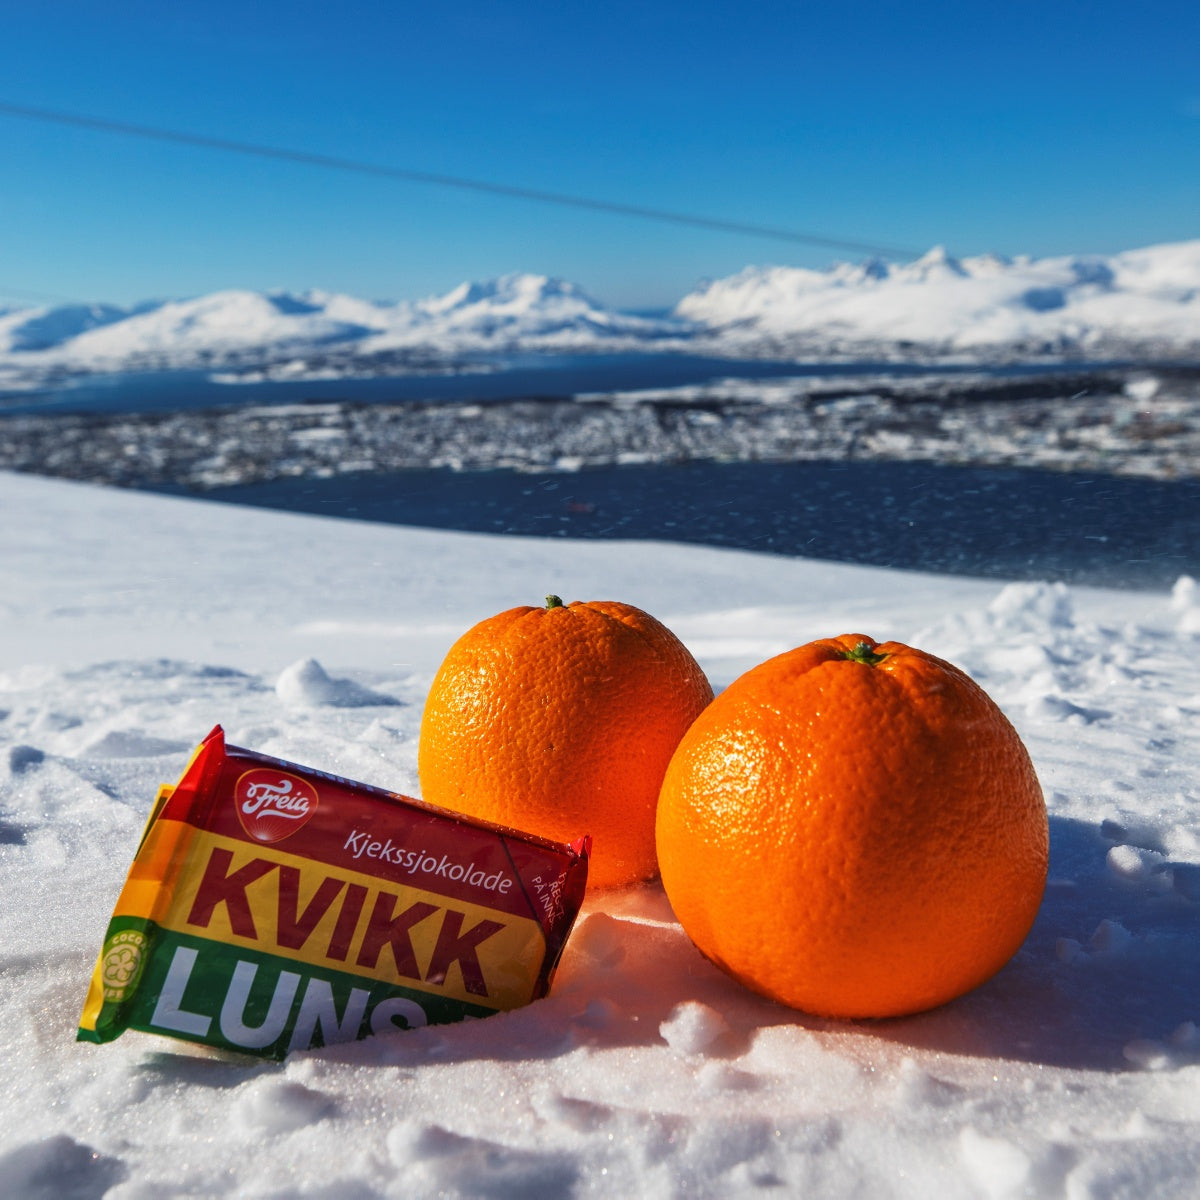 Freia Kvikk Lunsj 6 Pack - Norway Chocolate Covered Wafers 47 grams (6 Pack)